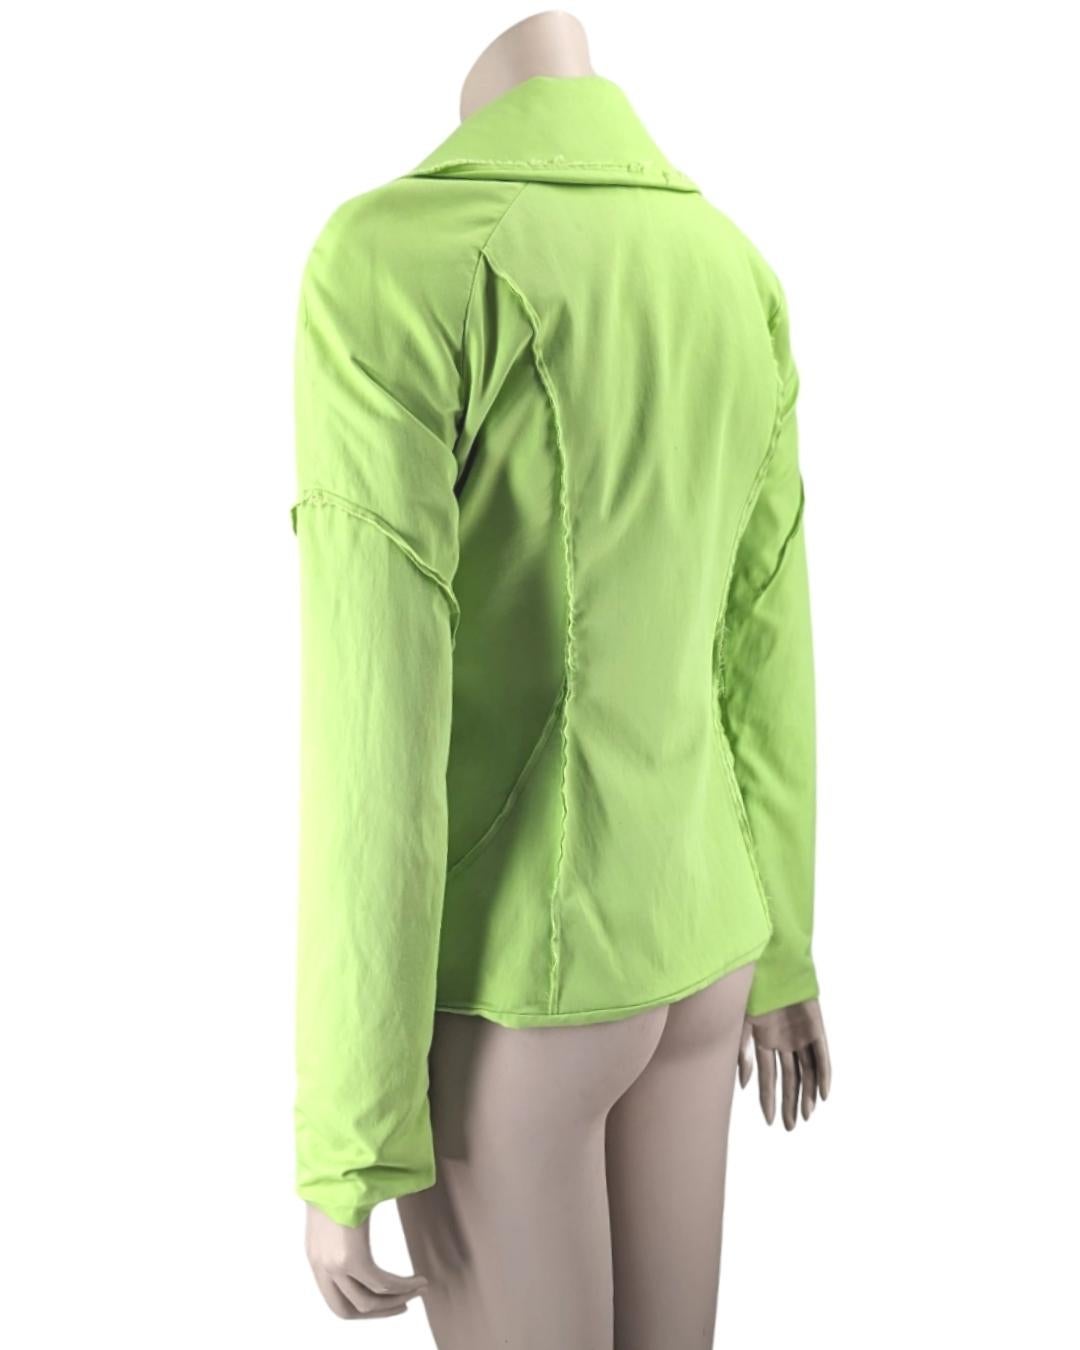 Mugler Acid Green Jacket  with its iconic shape For Sale 3